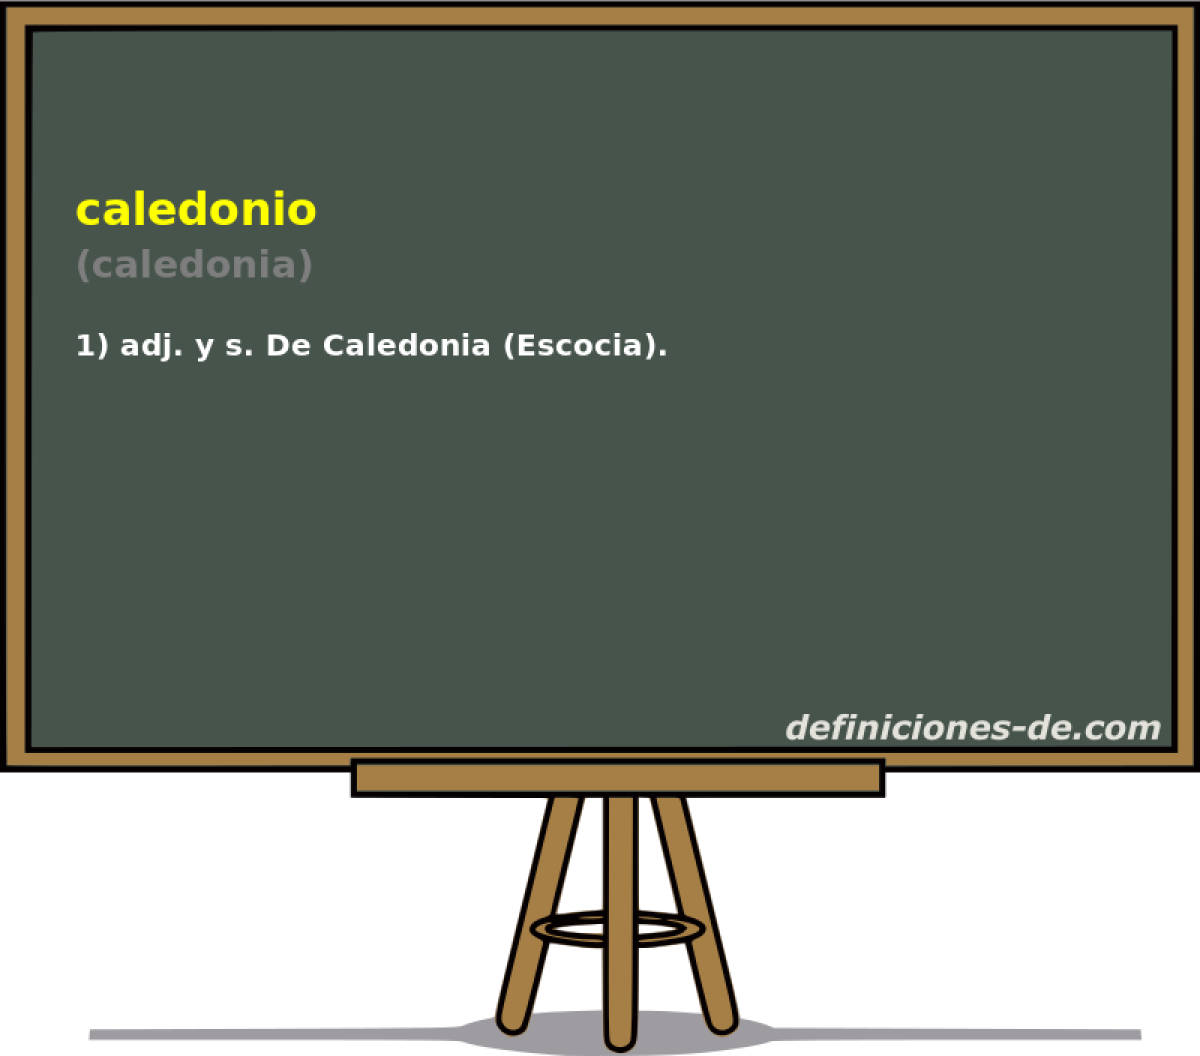 caledonio (caledonia)